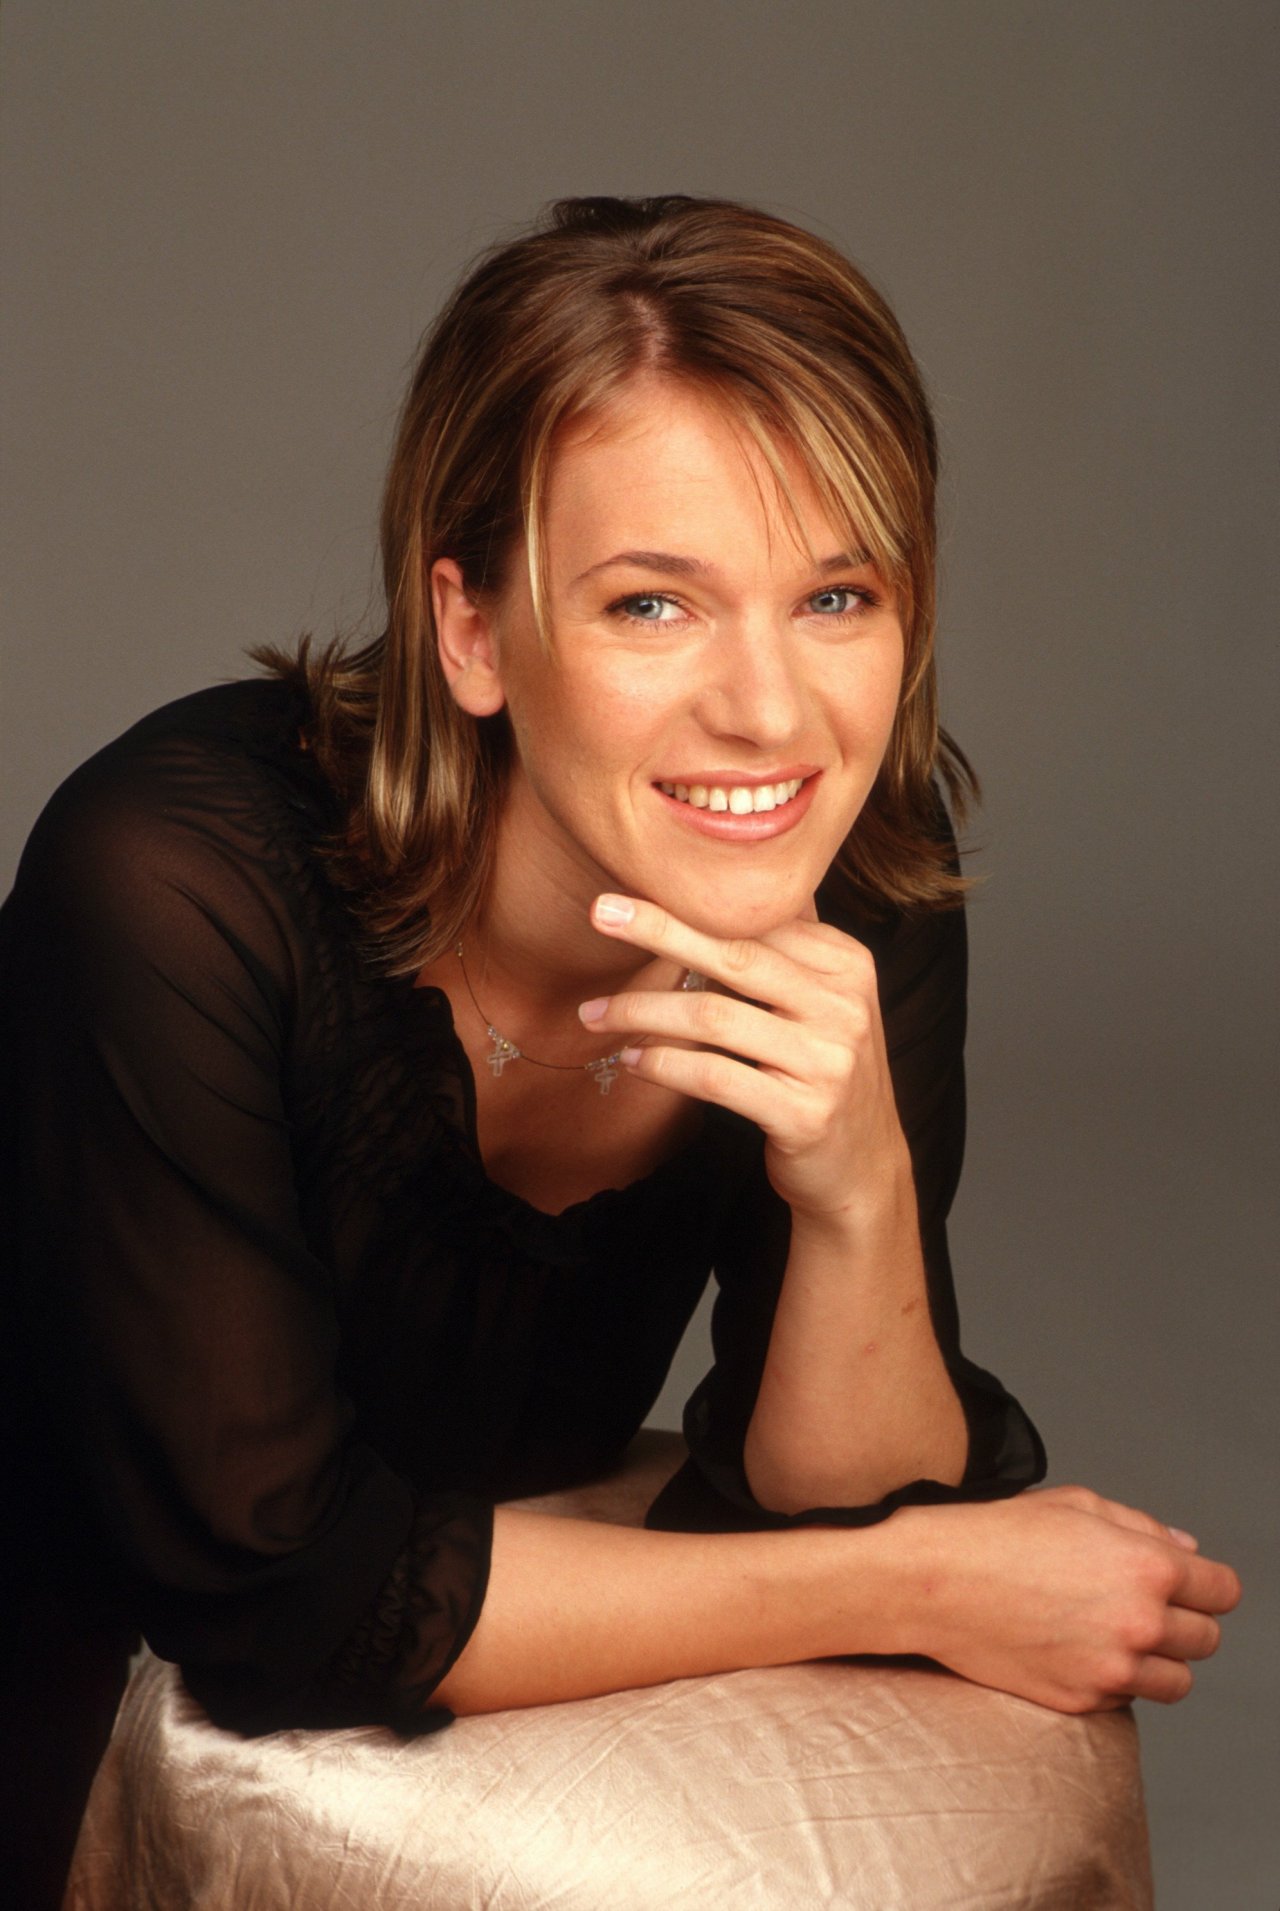 Kerstin Landsmann